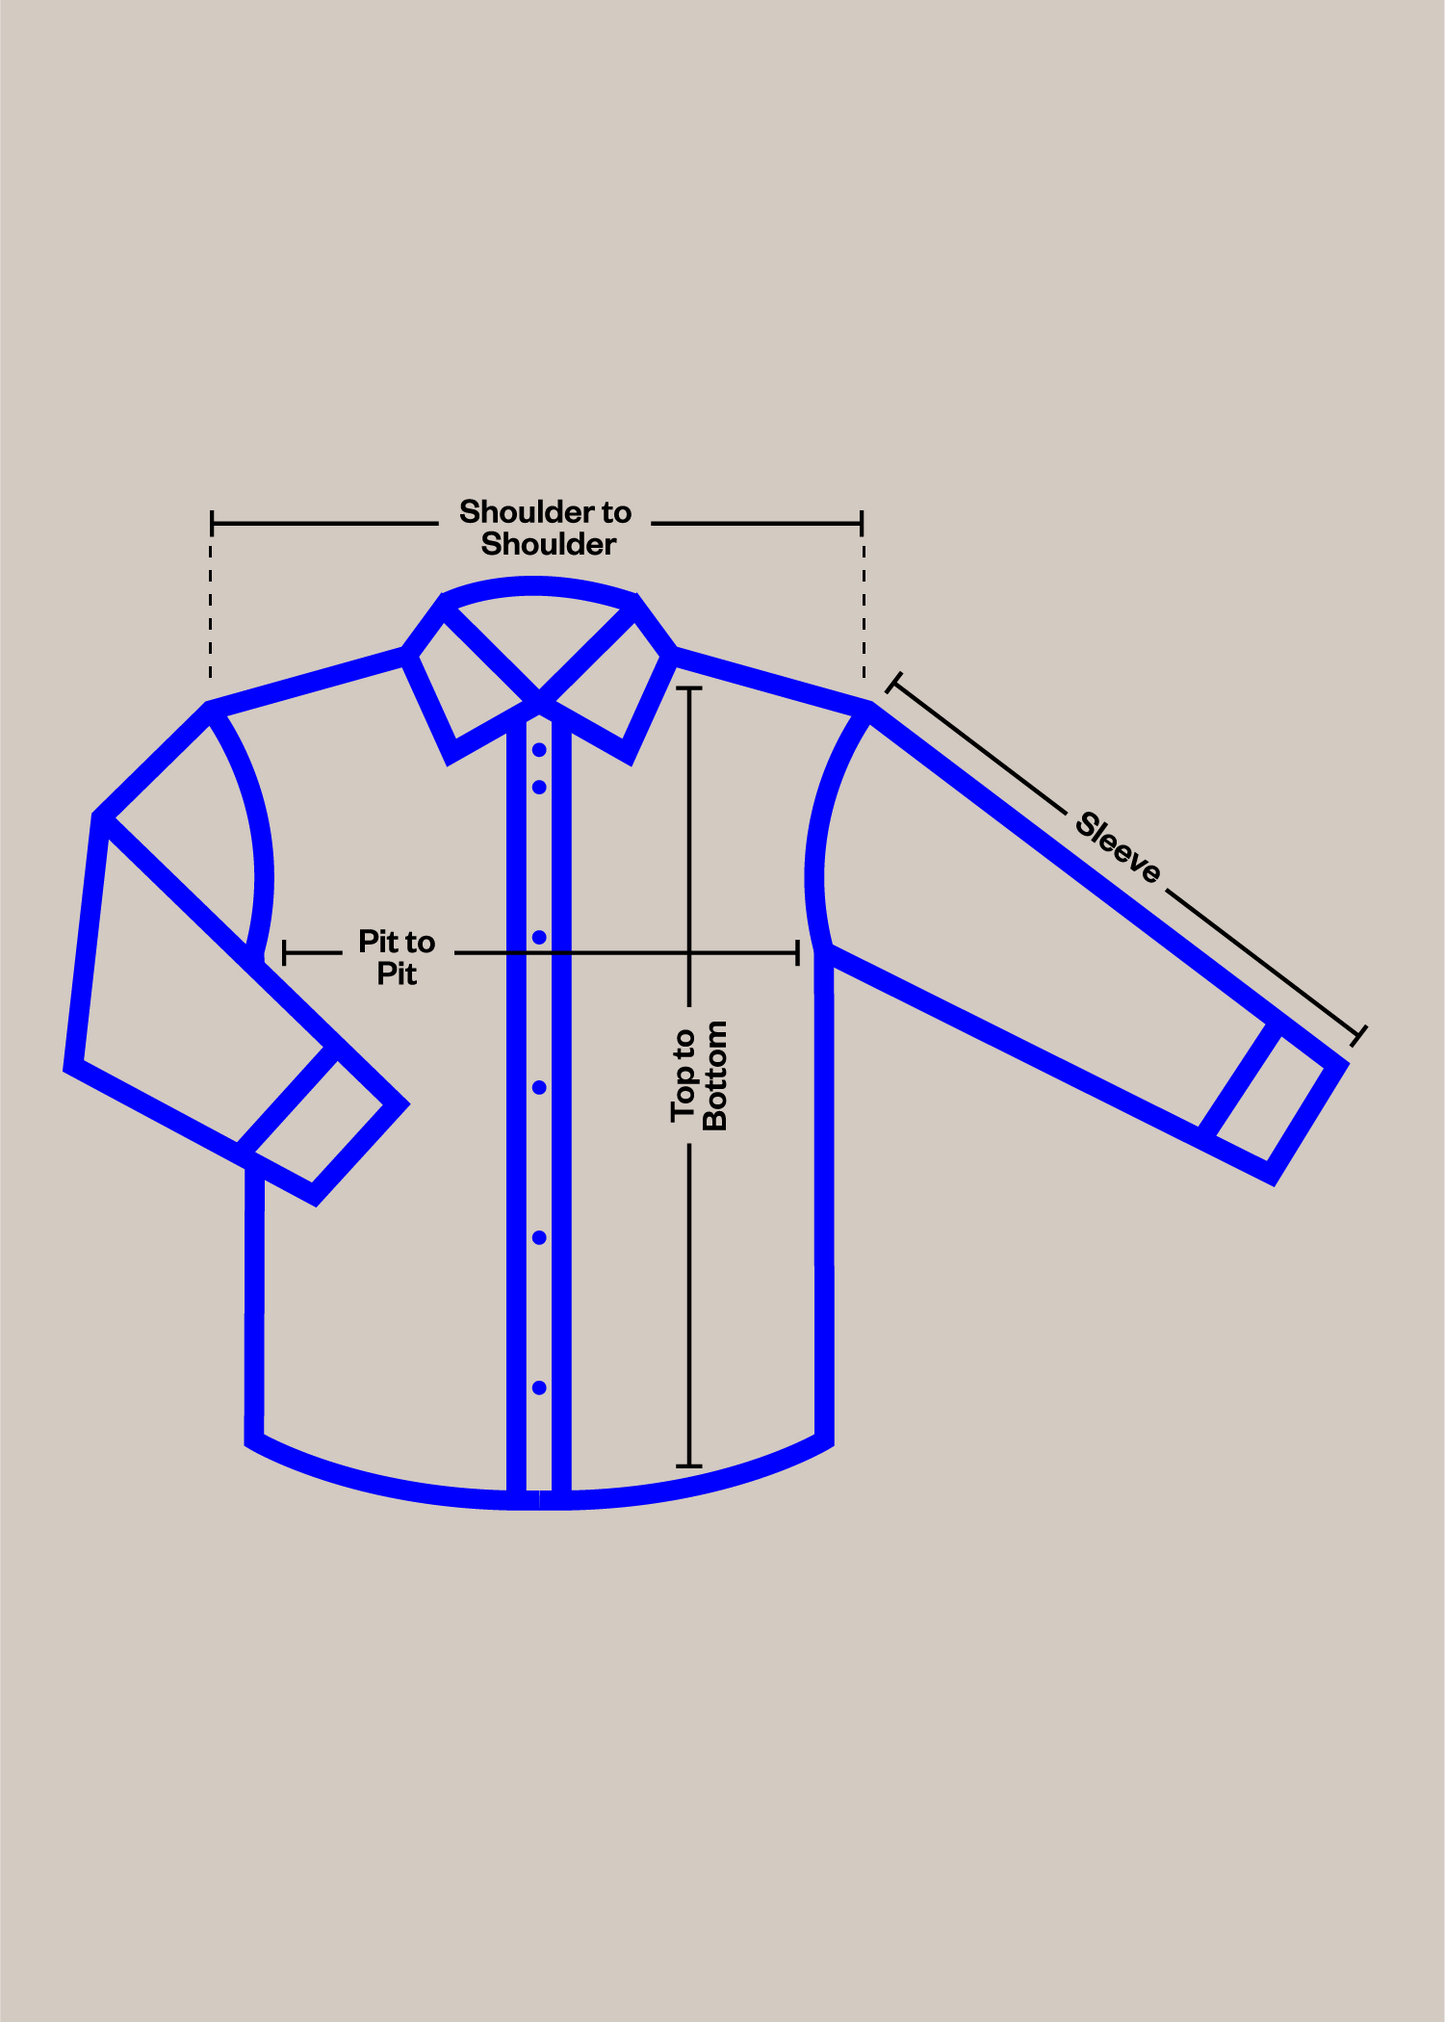 1980s European Workwear Zip Up Chore Jacket Size XS/S